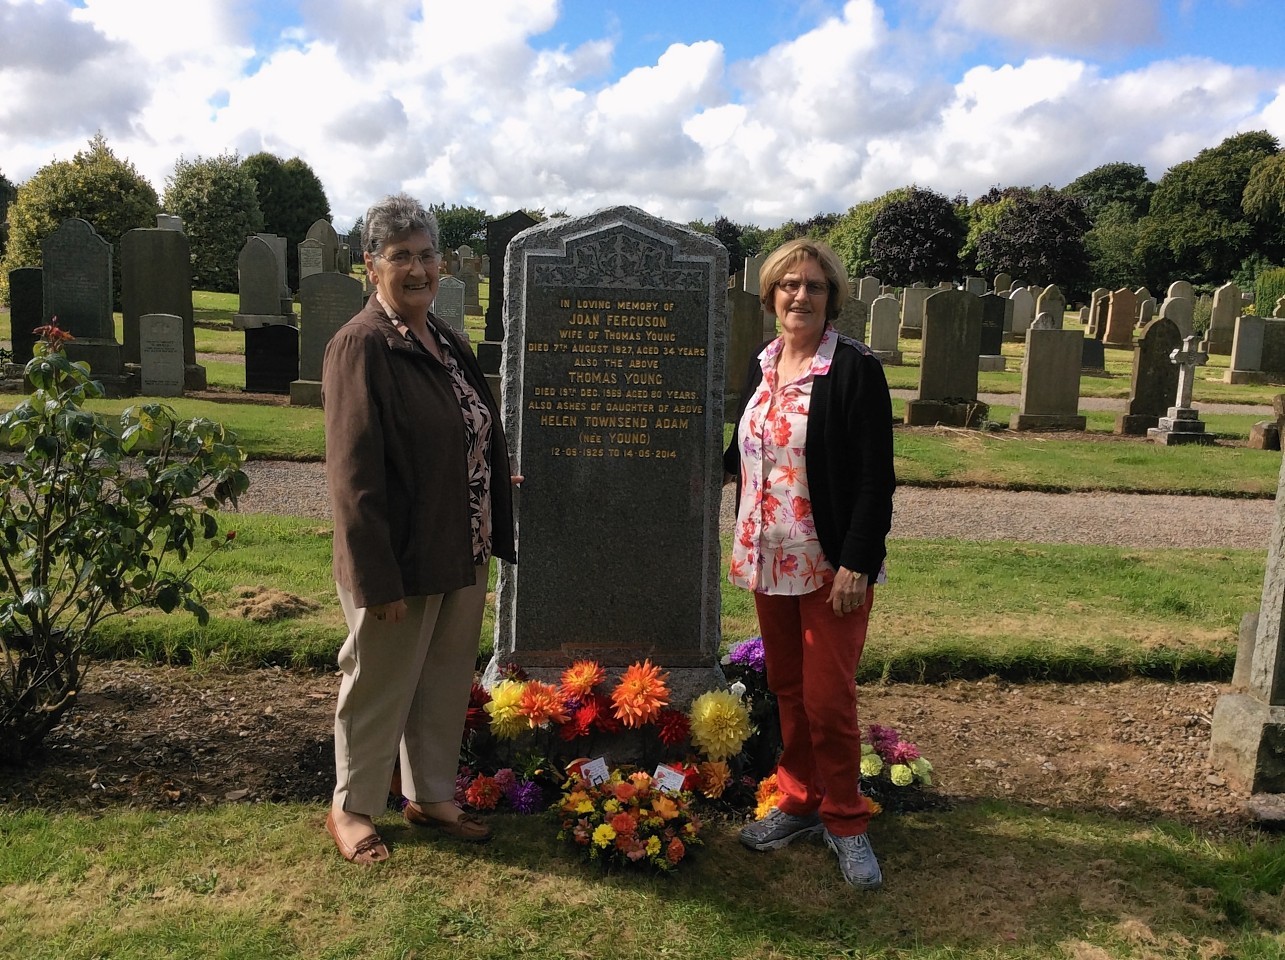 Jean MacKinnon and Linda Bruce at the grave stone of Joan Ferguson